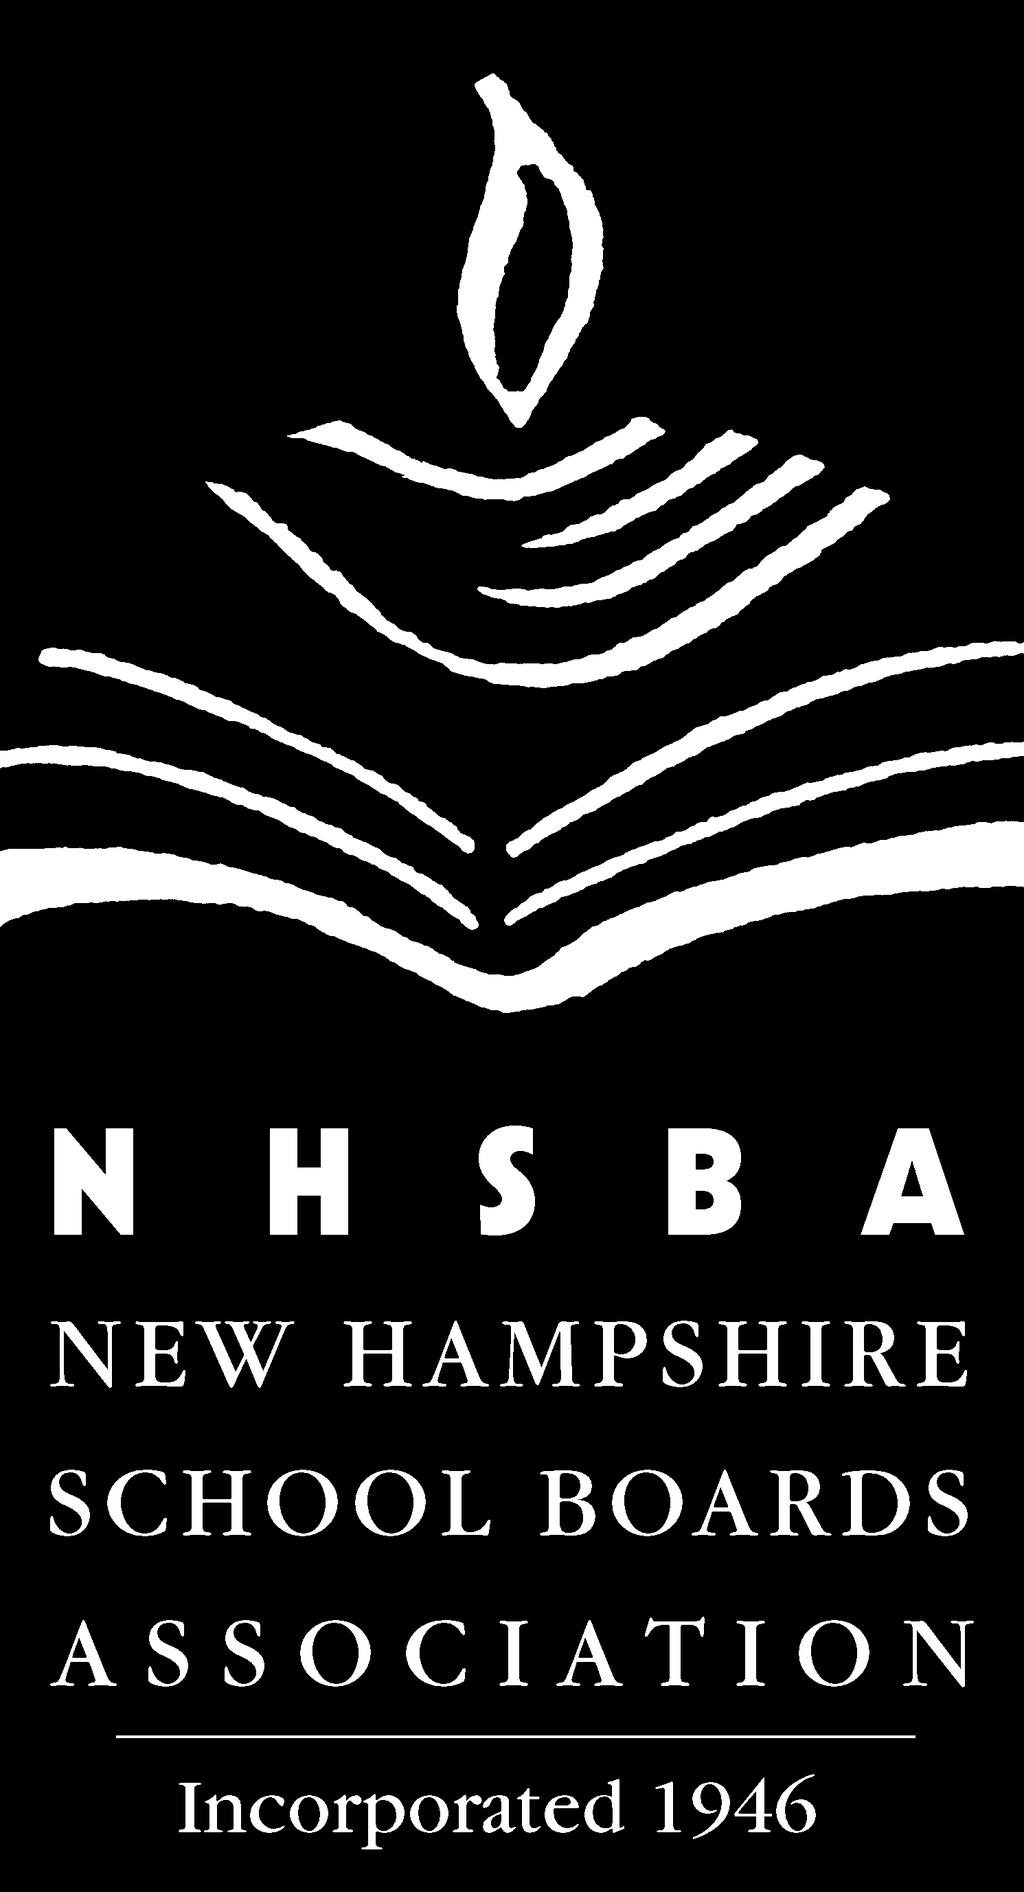 New Hampshire School Boards Association 25 Triangle Park Drive, Suite 101 Concord, NH 03301 (603) 228-2061 (603) 228-2351 (fax) Barrett Christina bchristina@nhsba.